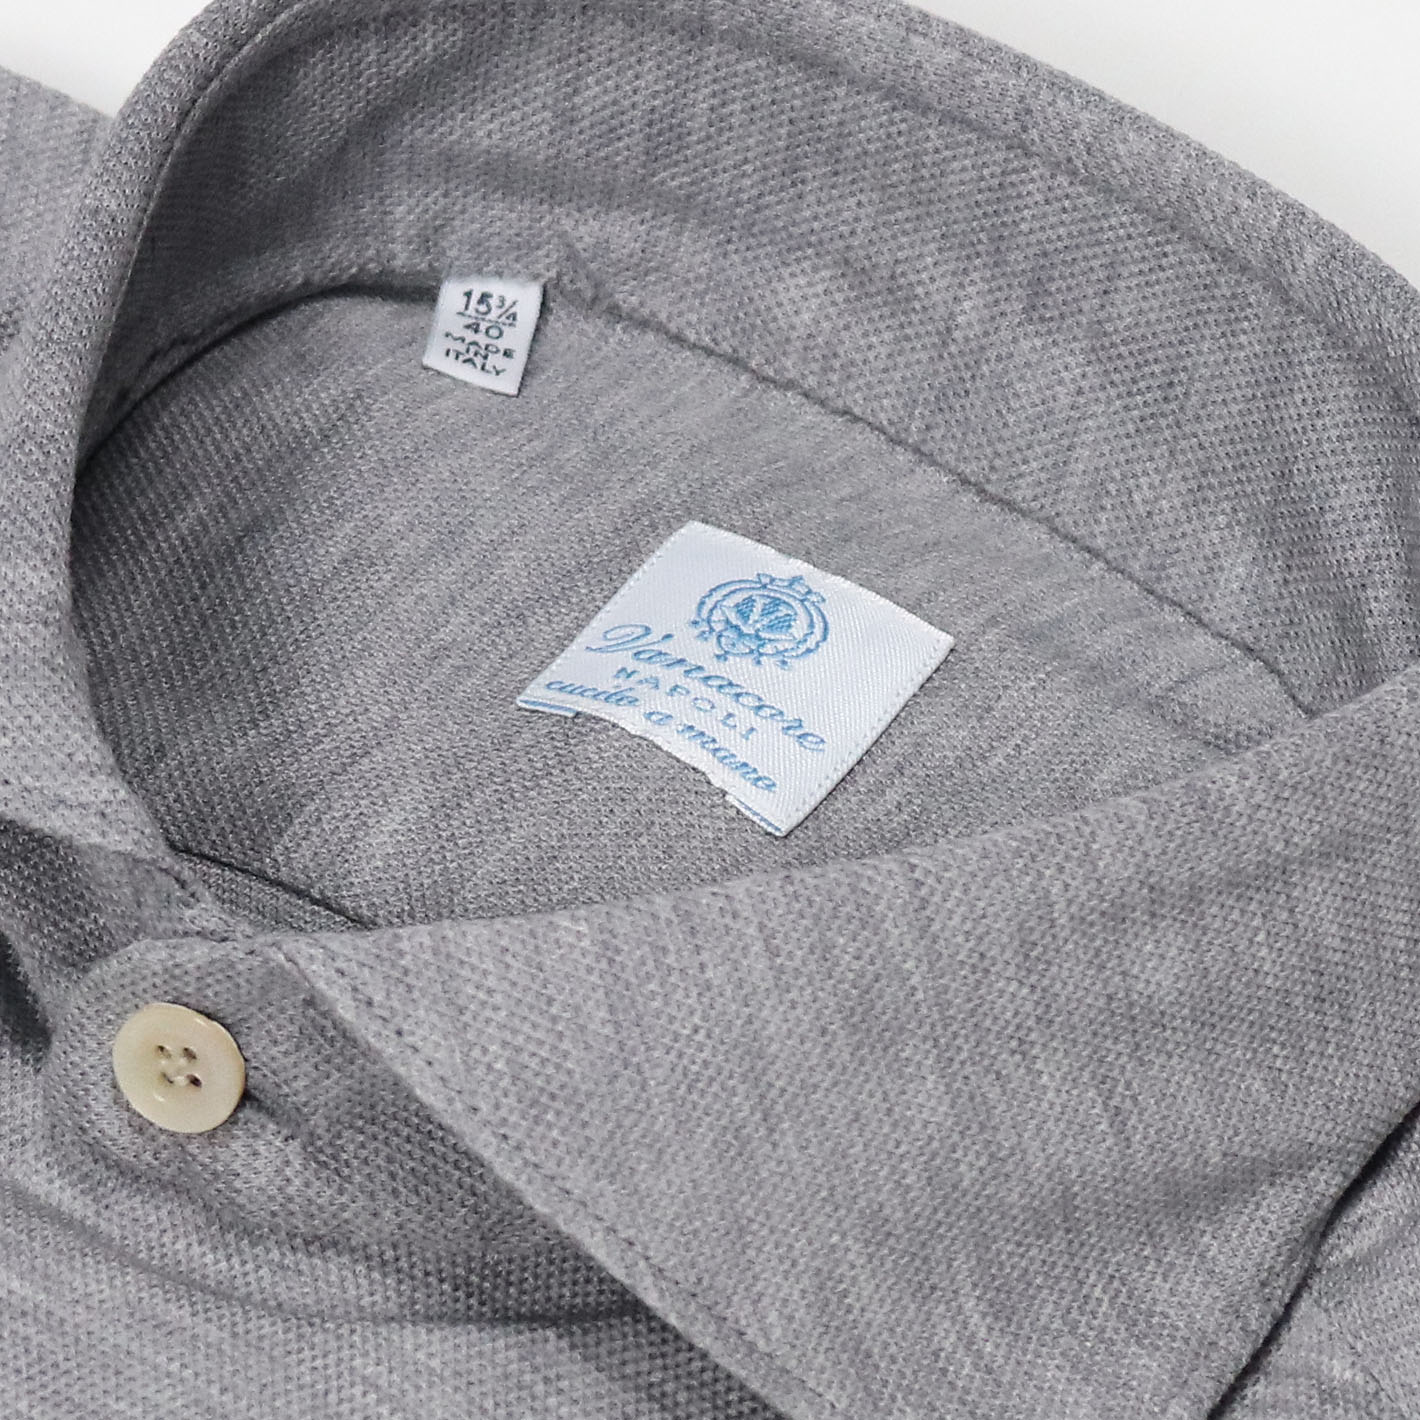 Grey Cotton Jersey Cutaway Shirt